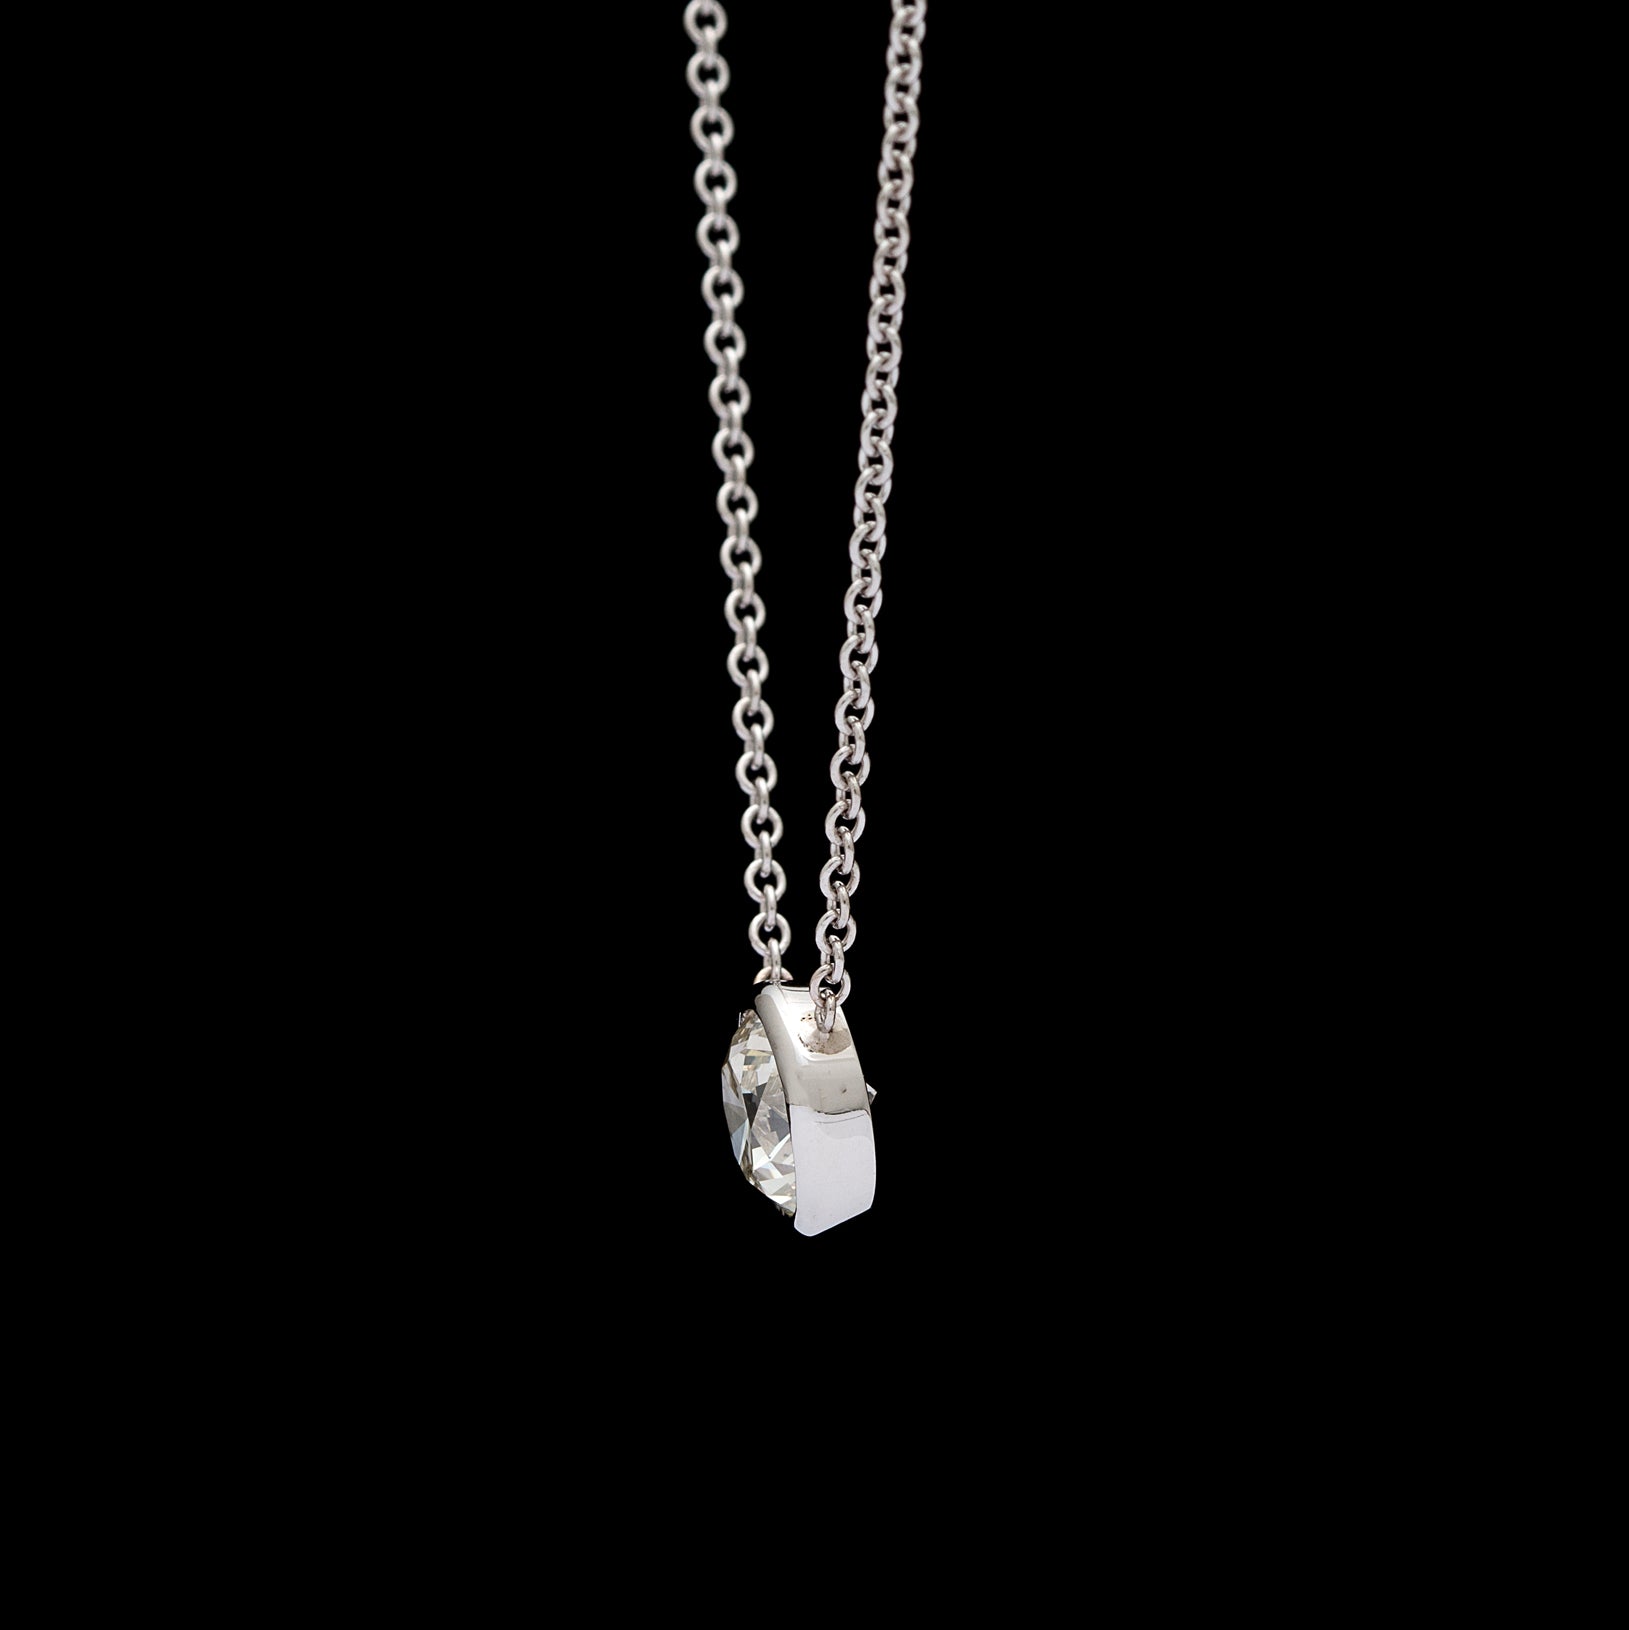 Louis Vuitton Empreinte Pendant Necklace 18k White Gold and